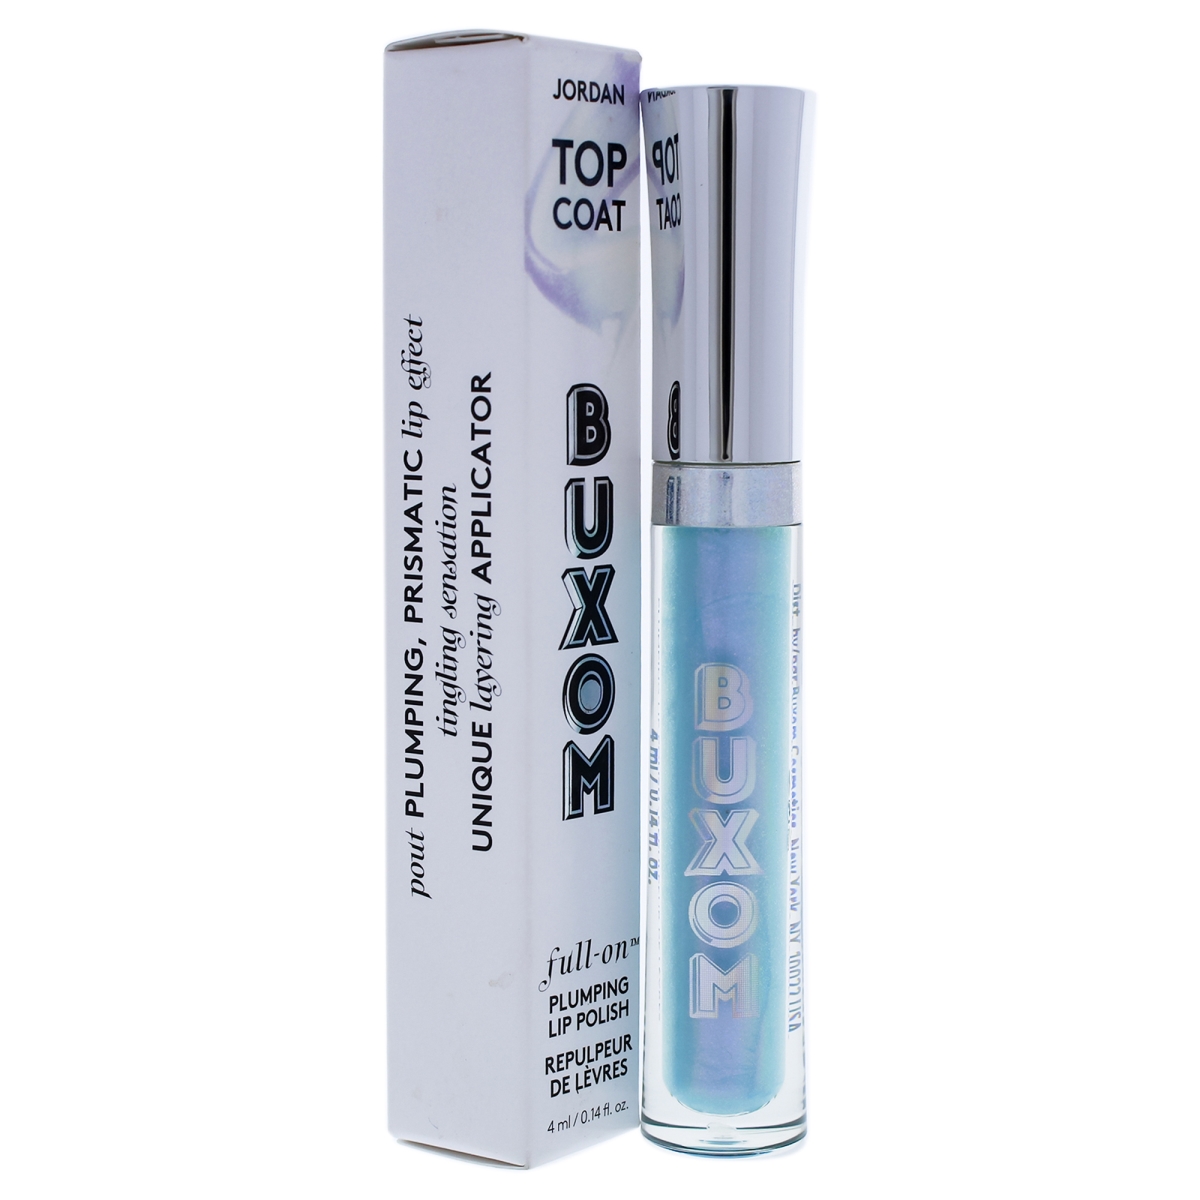 I0086640 0.15 Oz Full-on Plumping Lip Polish Lip Gloss For Womens - Jordan